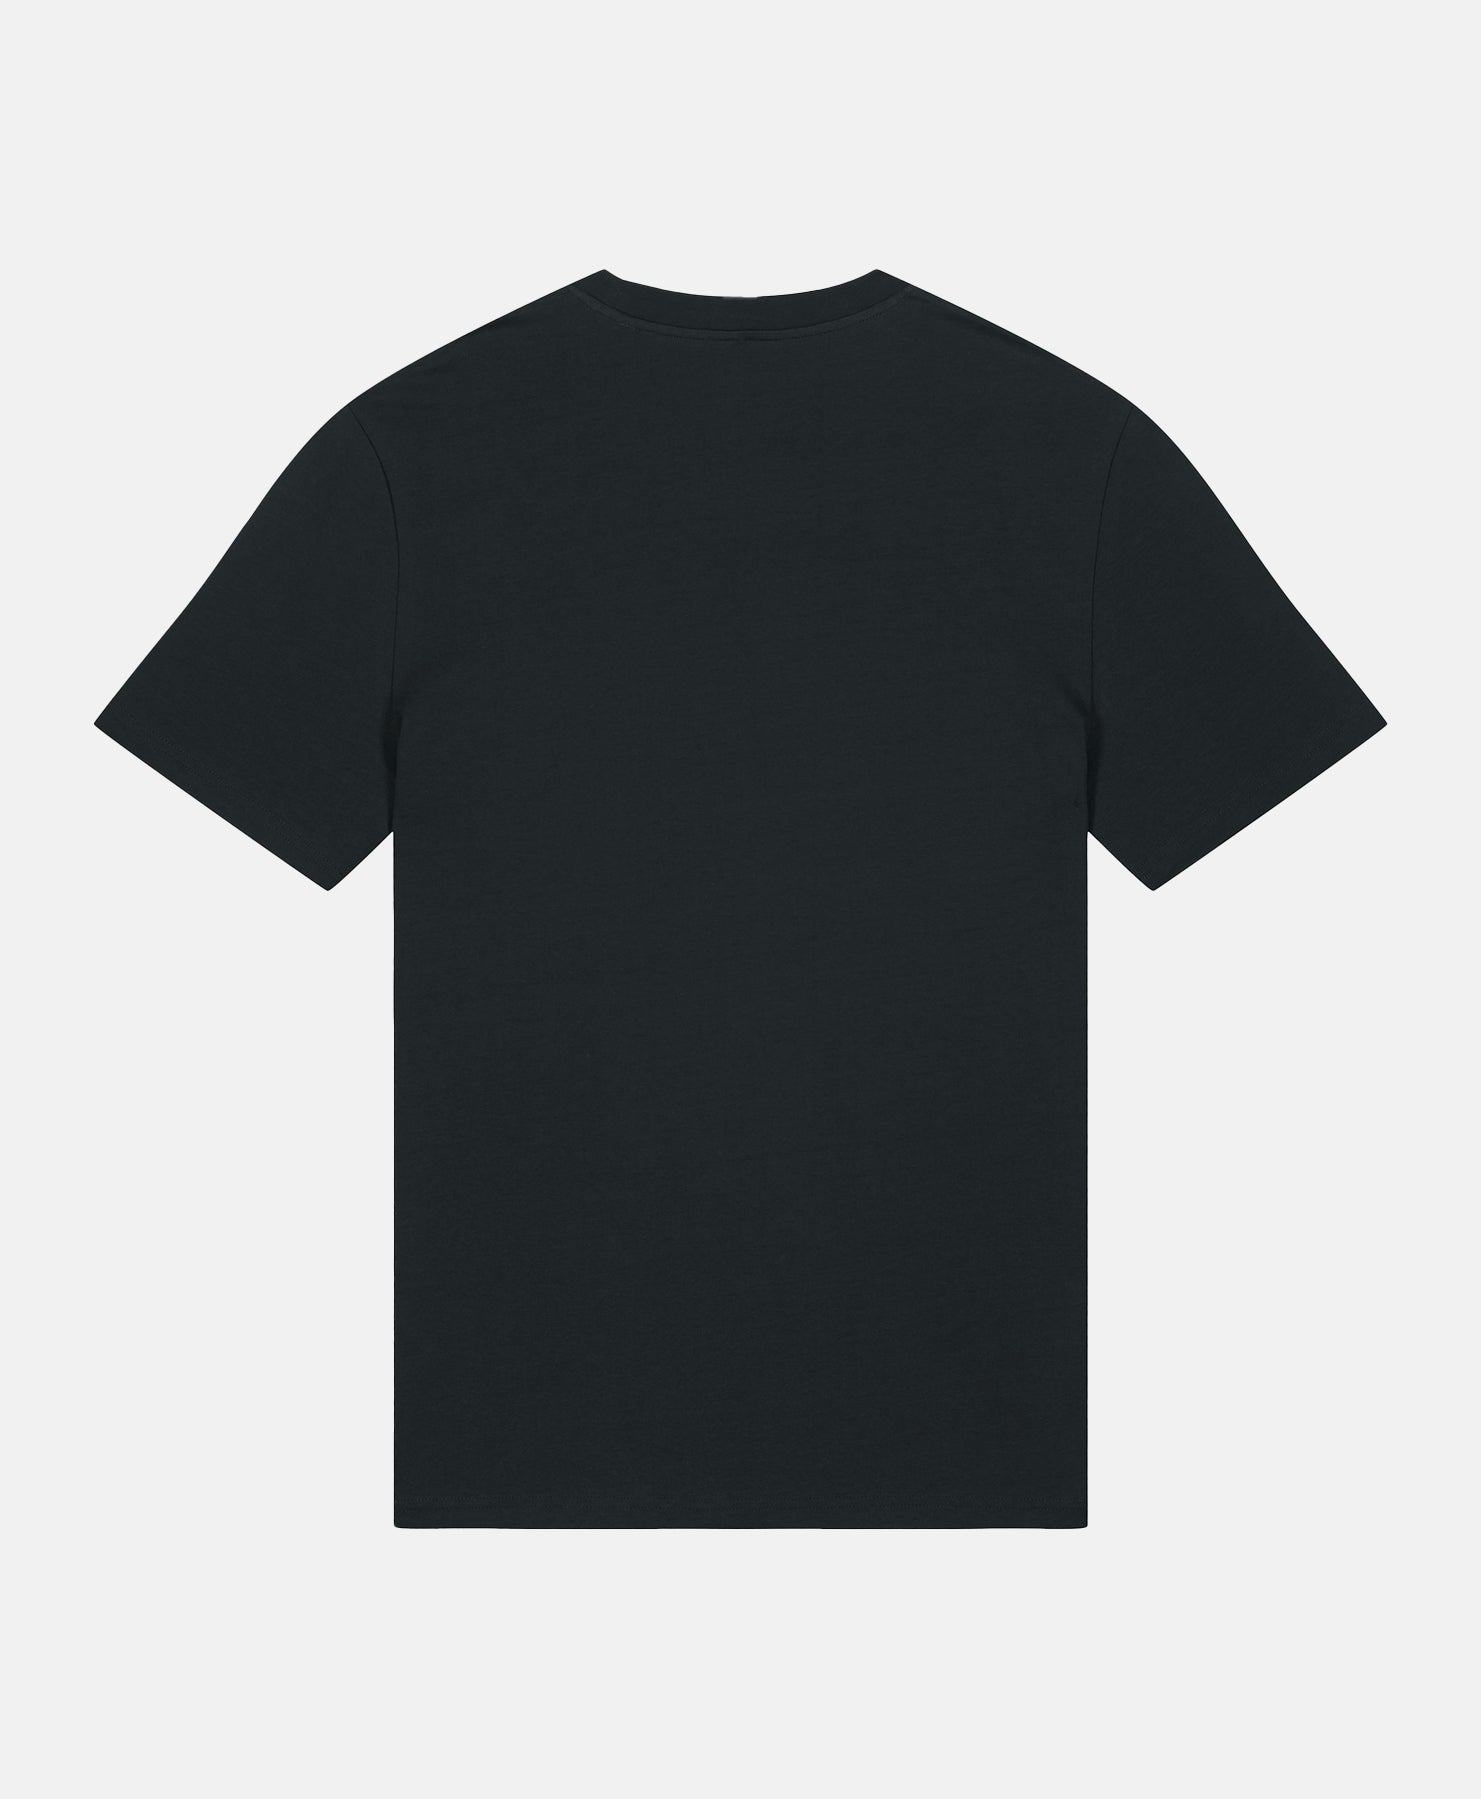 Jack Russell Terrier T-Shirt Black